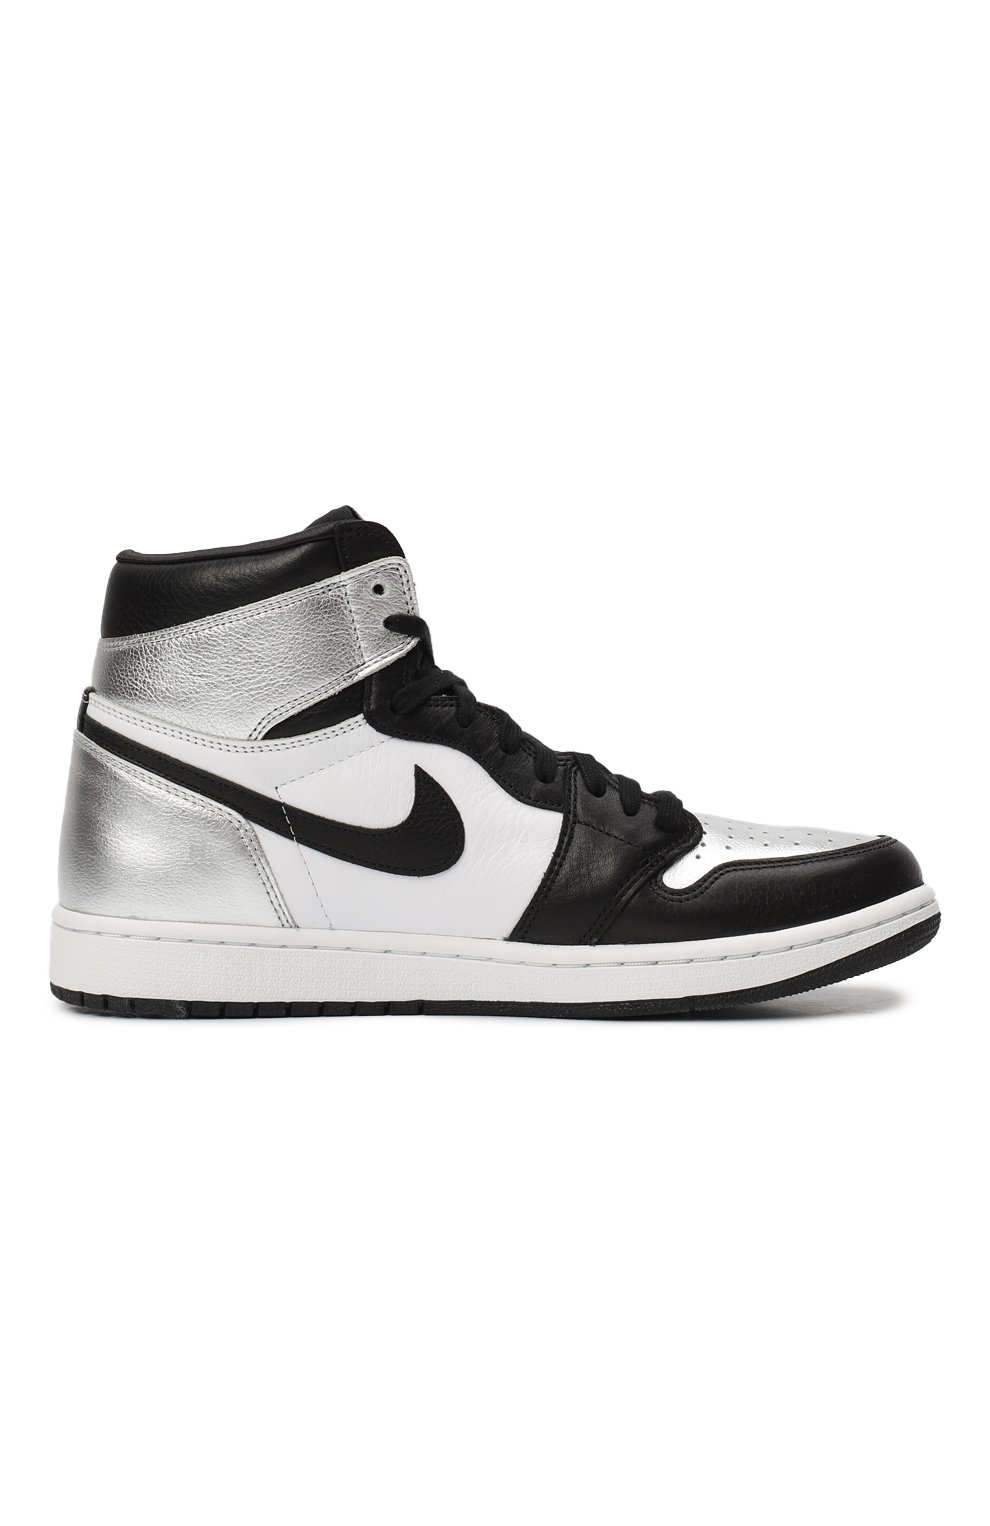 Кеды Air Jordan 1 Retro High Silver Toe | Nike | Разноцветный - 5